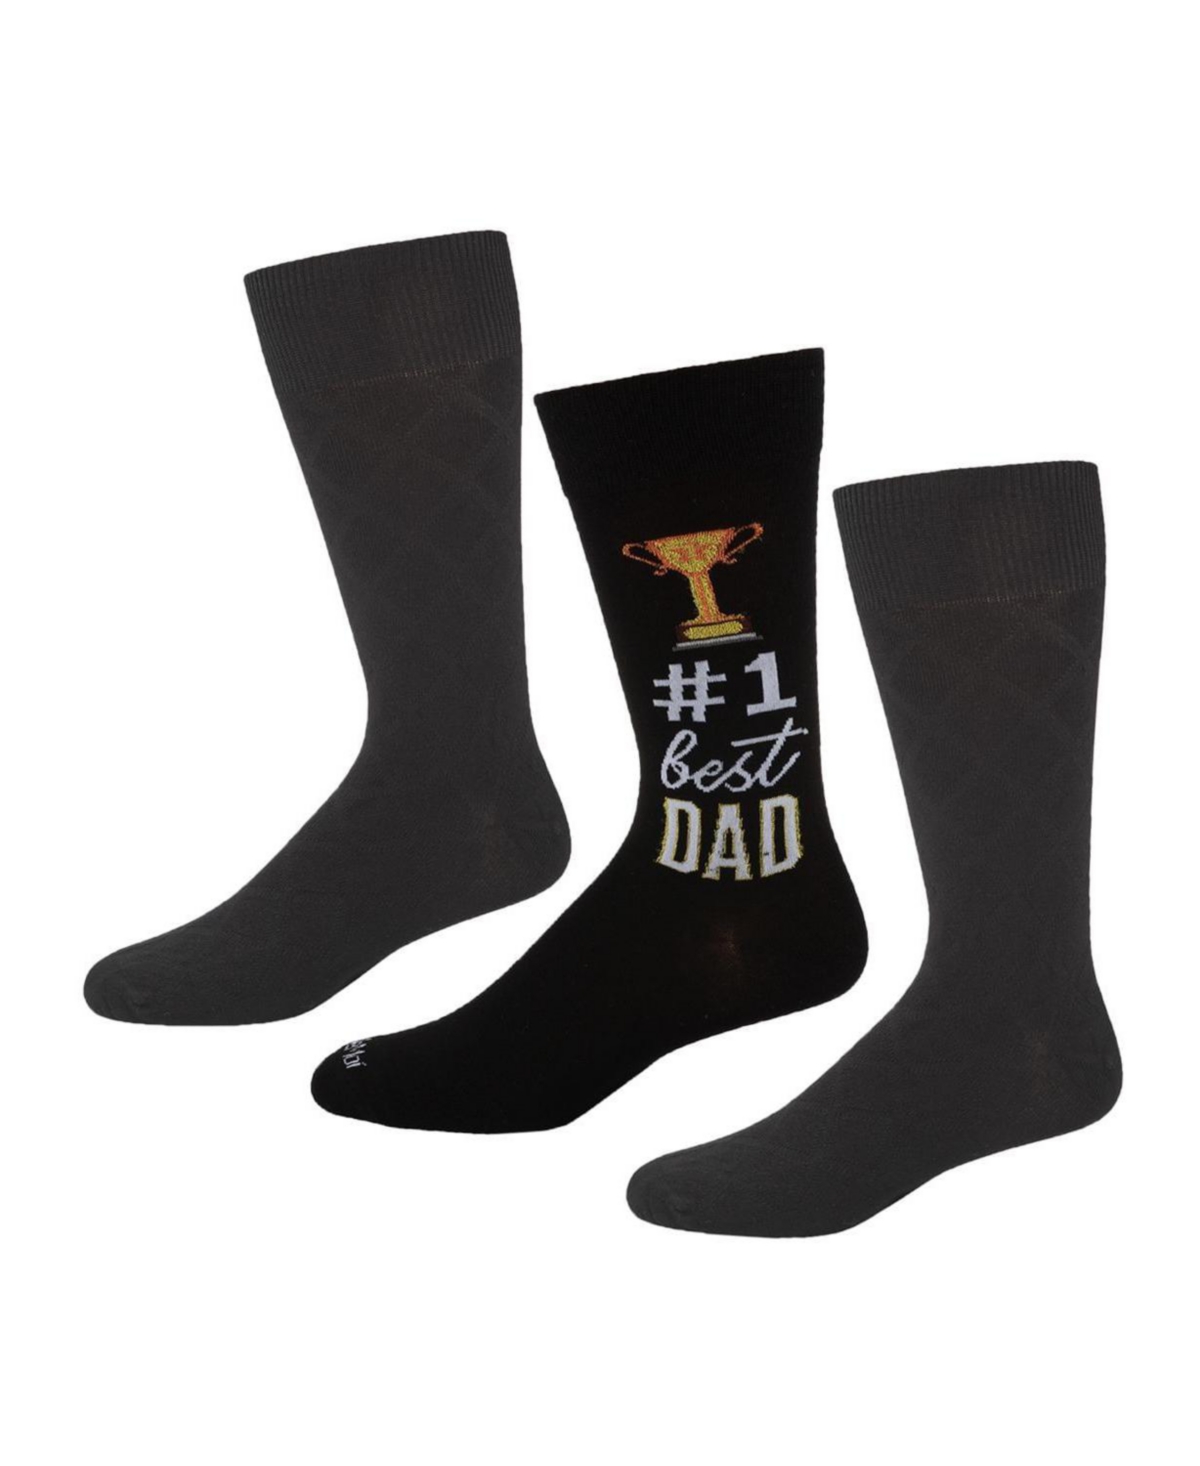 Men's Novelty Rayon From Bamboo Blend 3 Pair Pack Socks - Whiskey-Cigar-Black